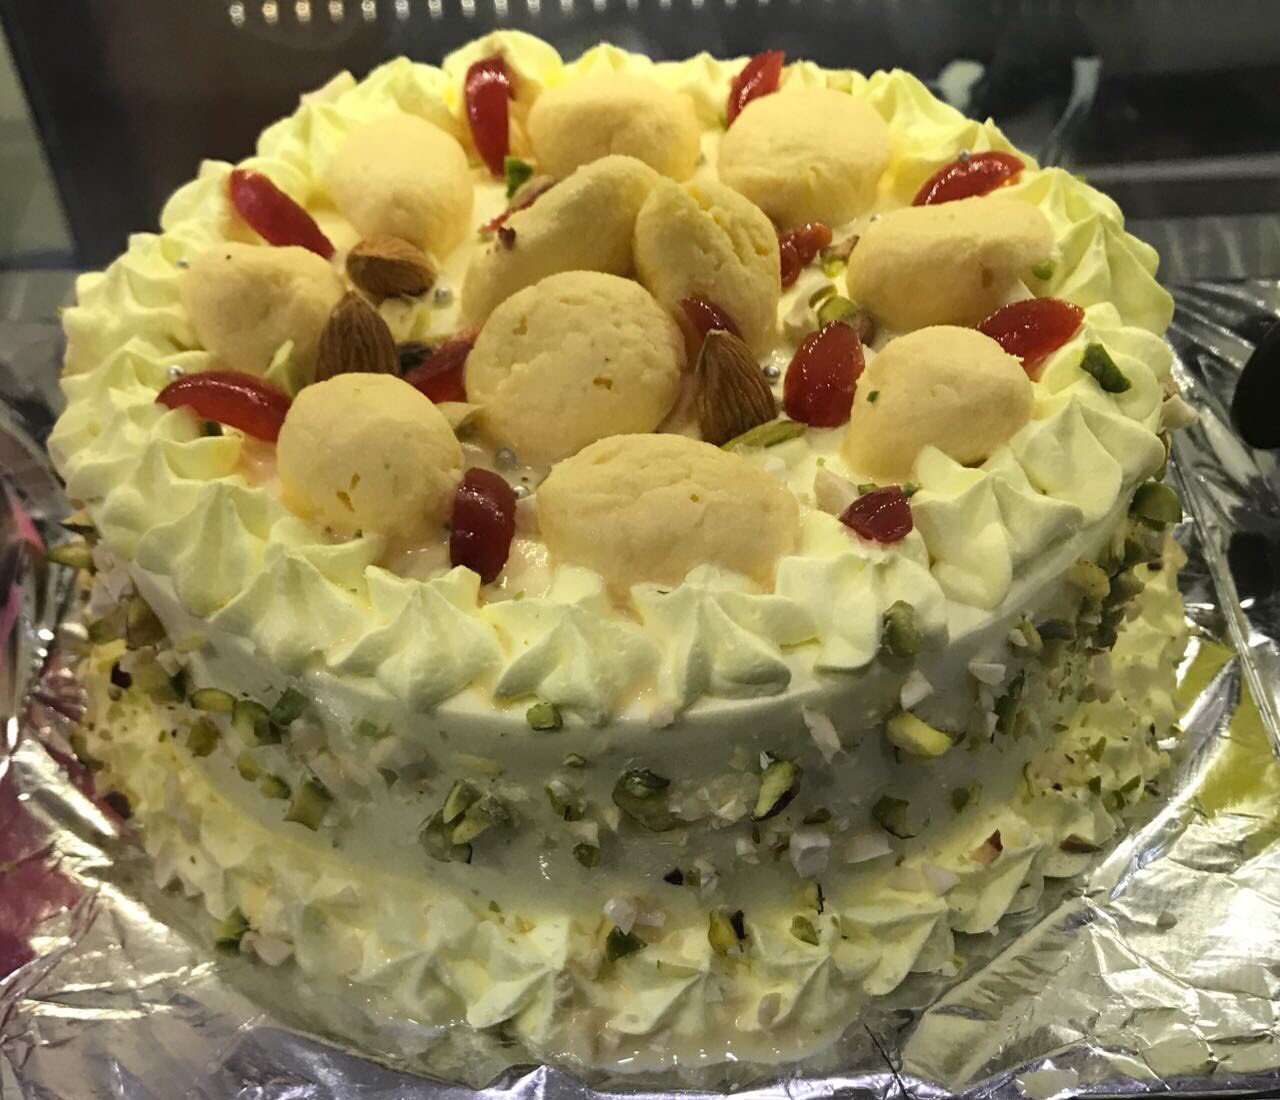 Rasmalai Cake, Kolkata Cake Shop, Order Online Cakes